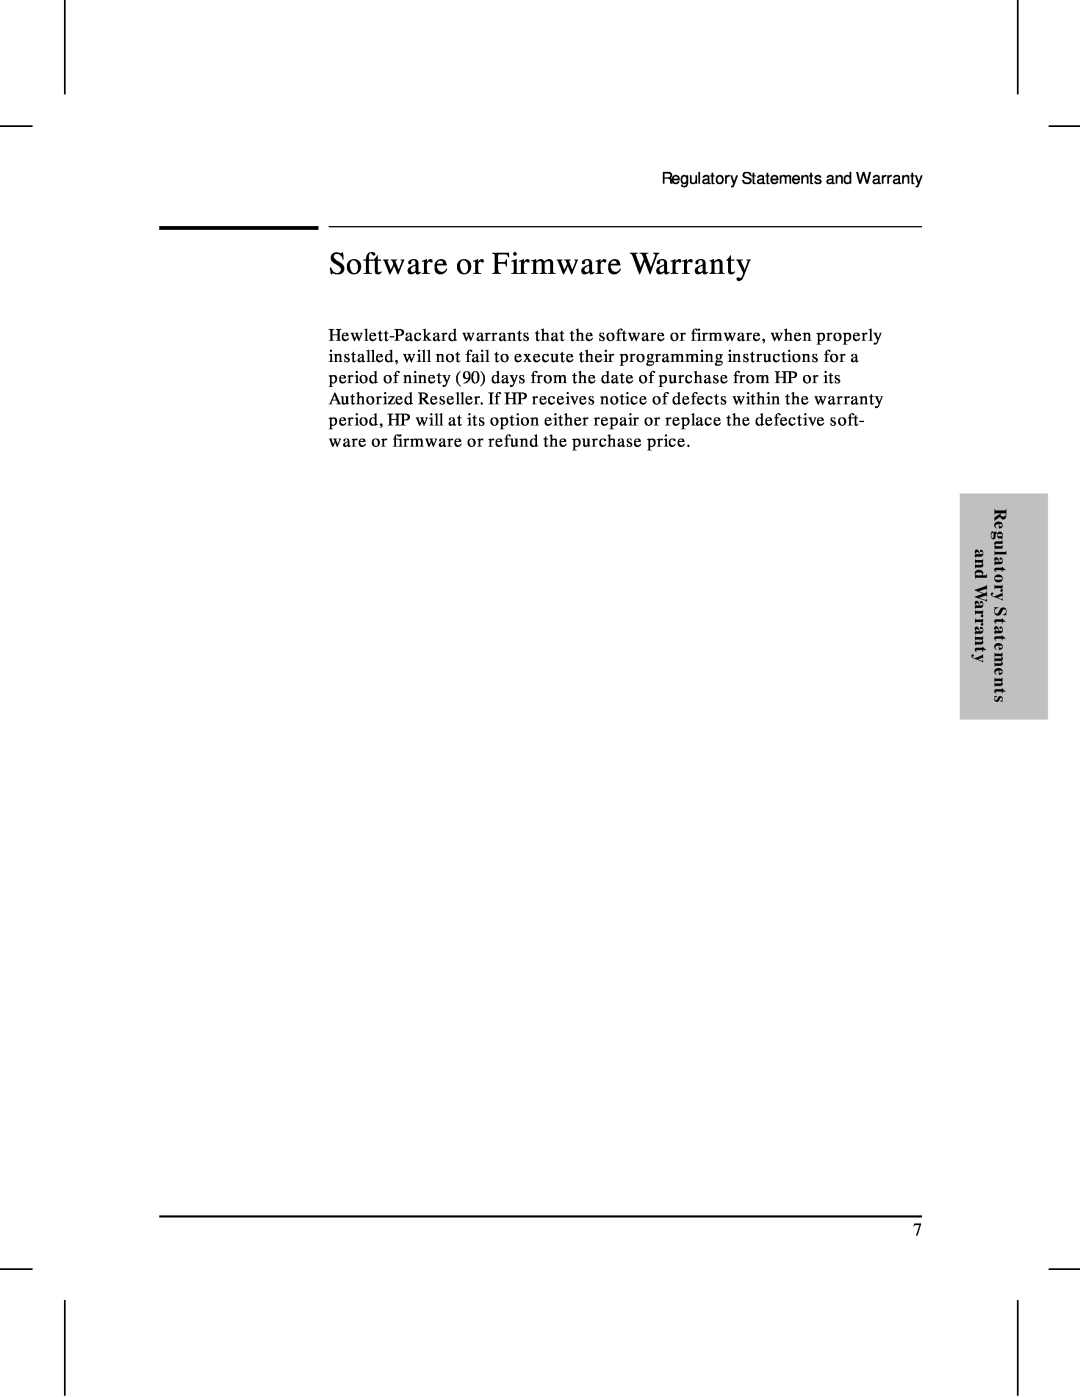 HP 480 manual Software or Firmware Warranty, Regulatory Statements and Warranty 